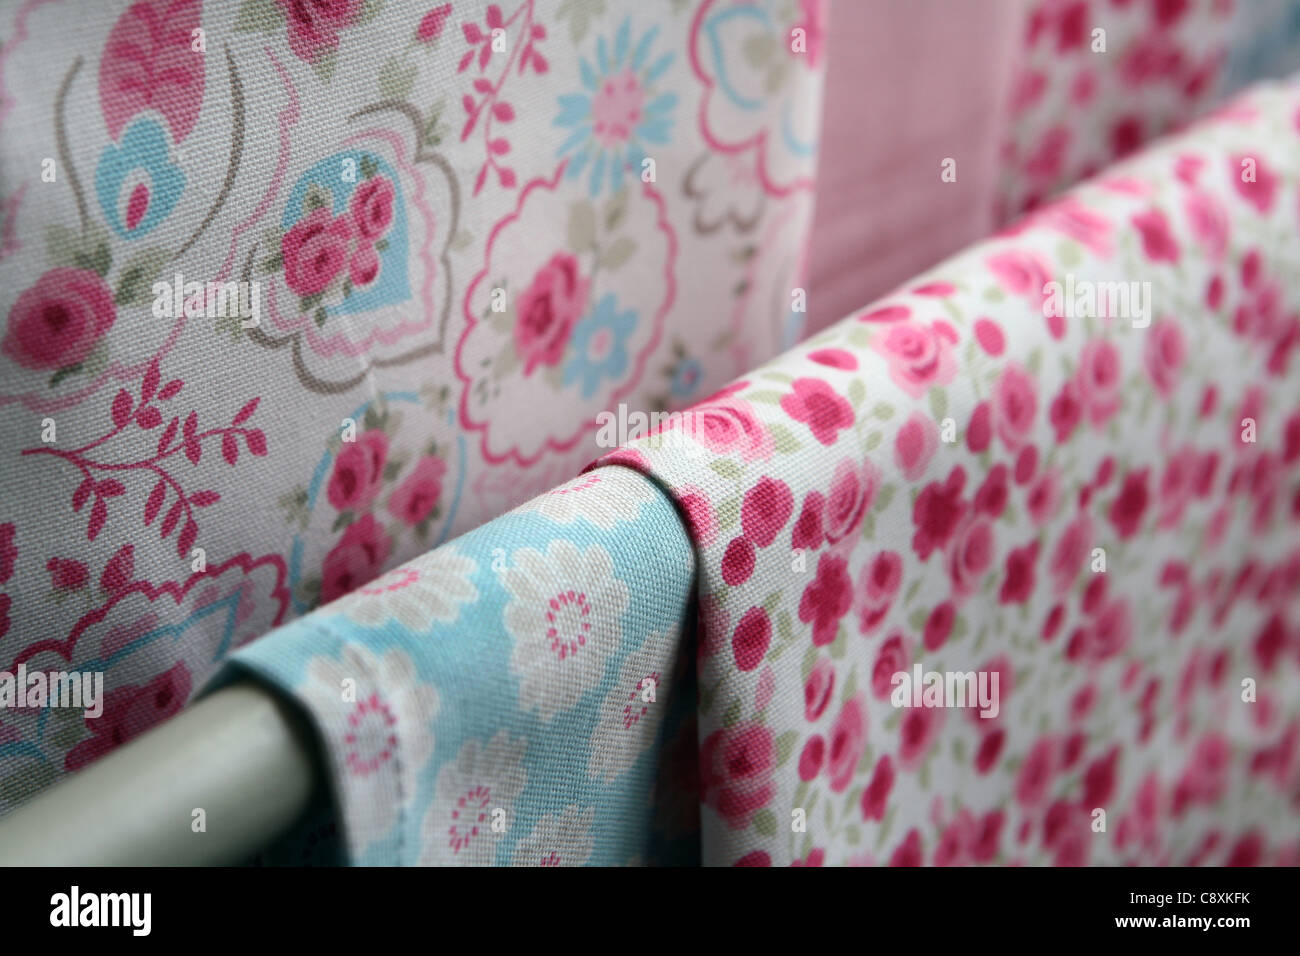 Bedruckte Textilien. Stockfoto